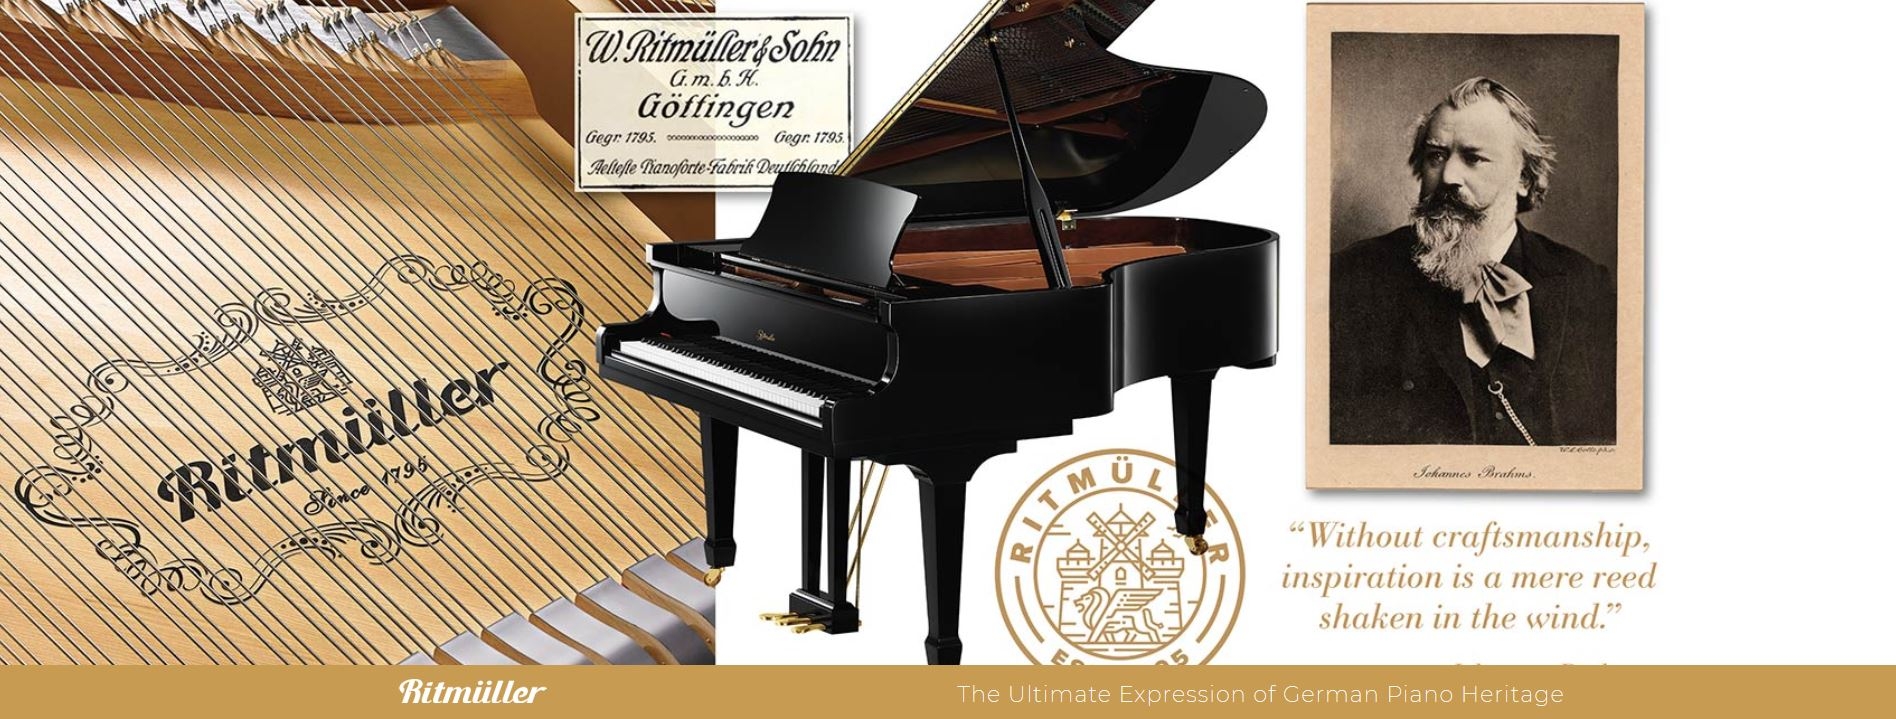 Ritmuller Piano History 